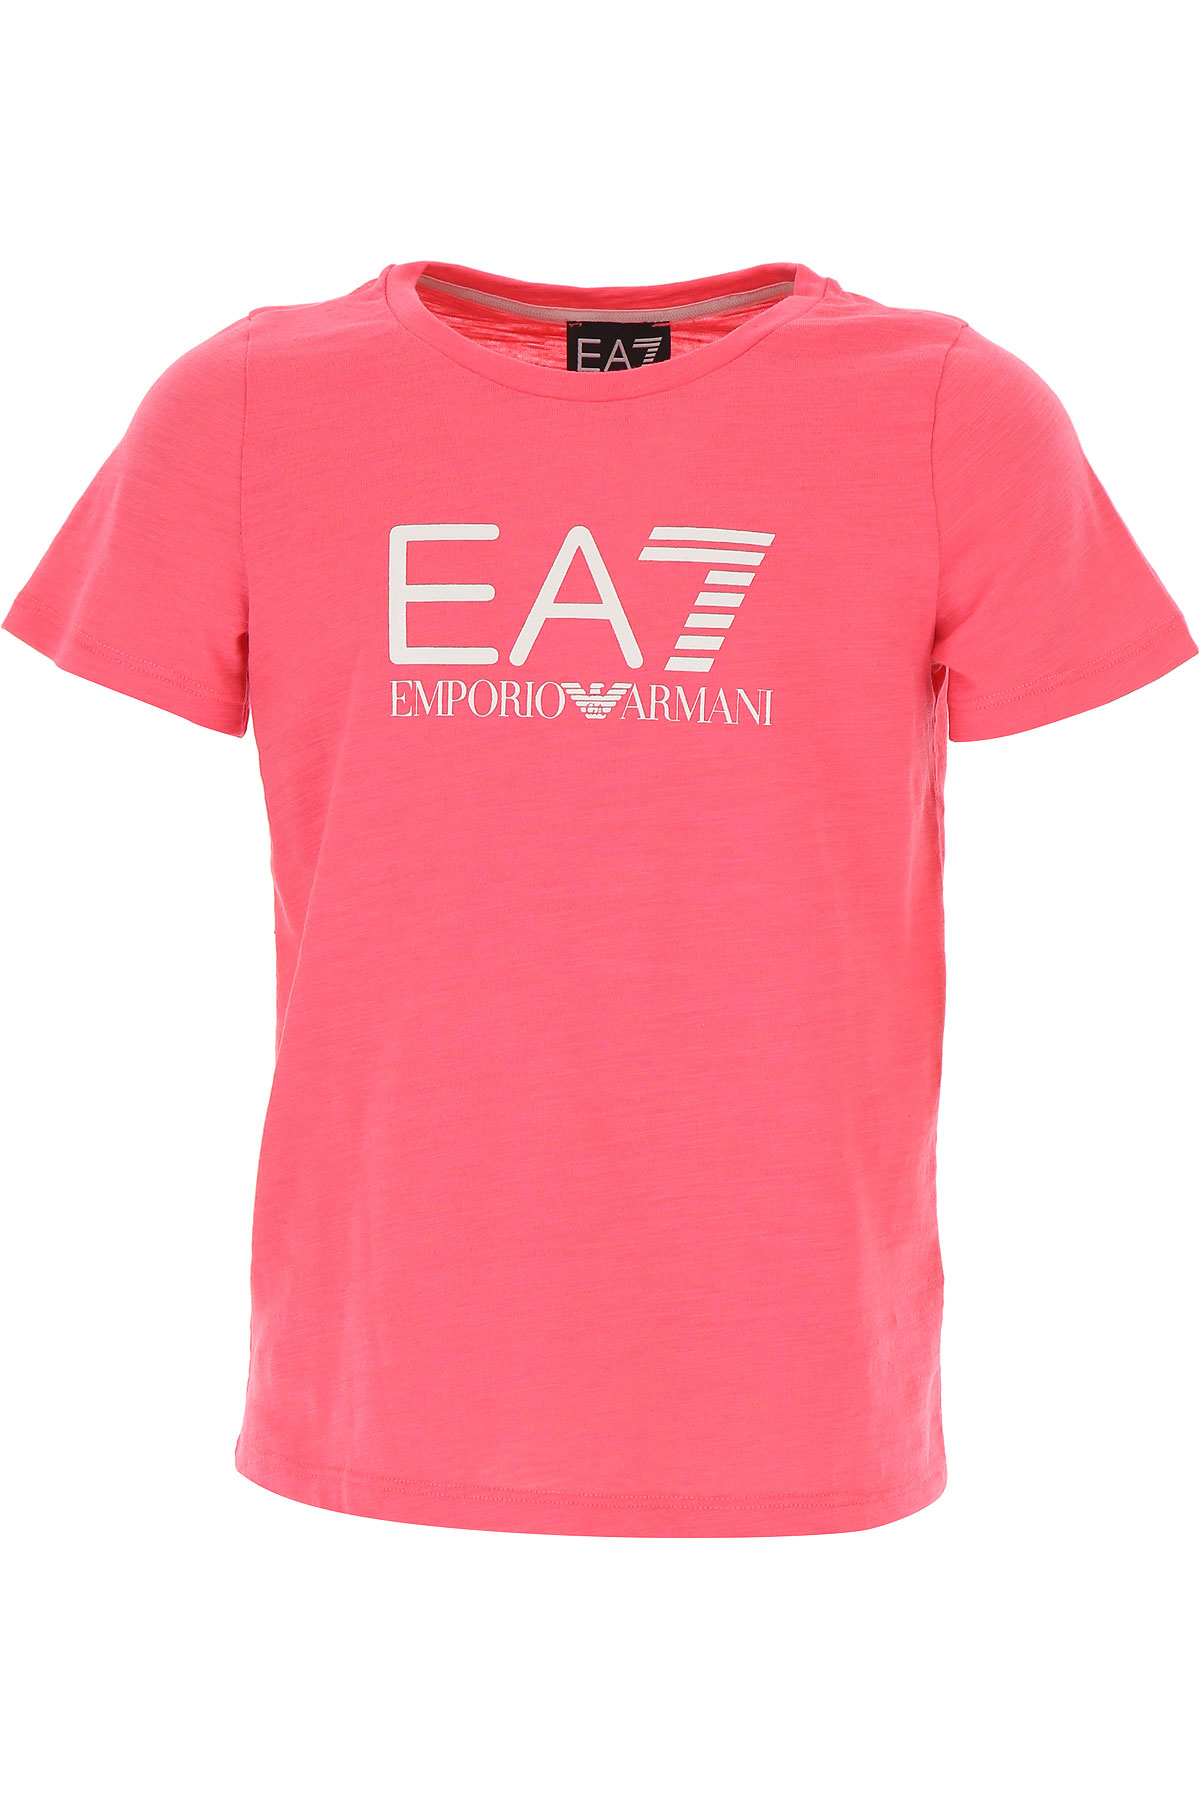 Emporio Armani Kinder T-Shirt für Mädchen Günstig im Outlet Sale, Polyester, 2017, 12Y 4Y 6Y 8Y